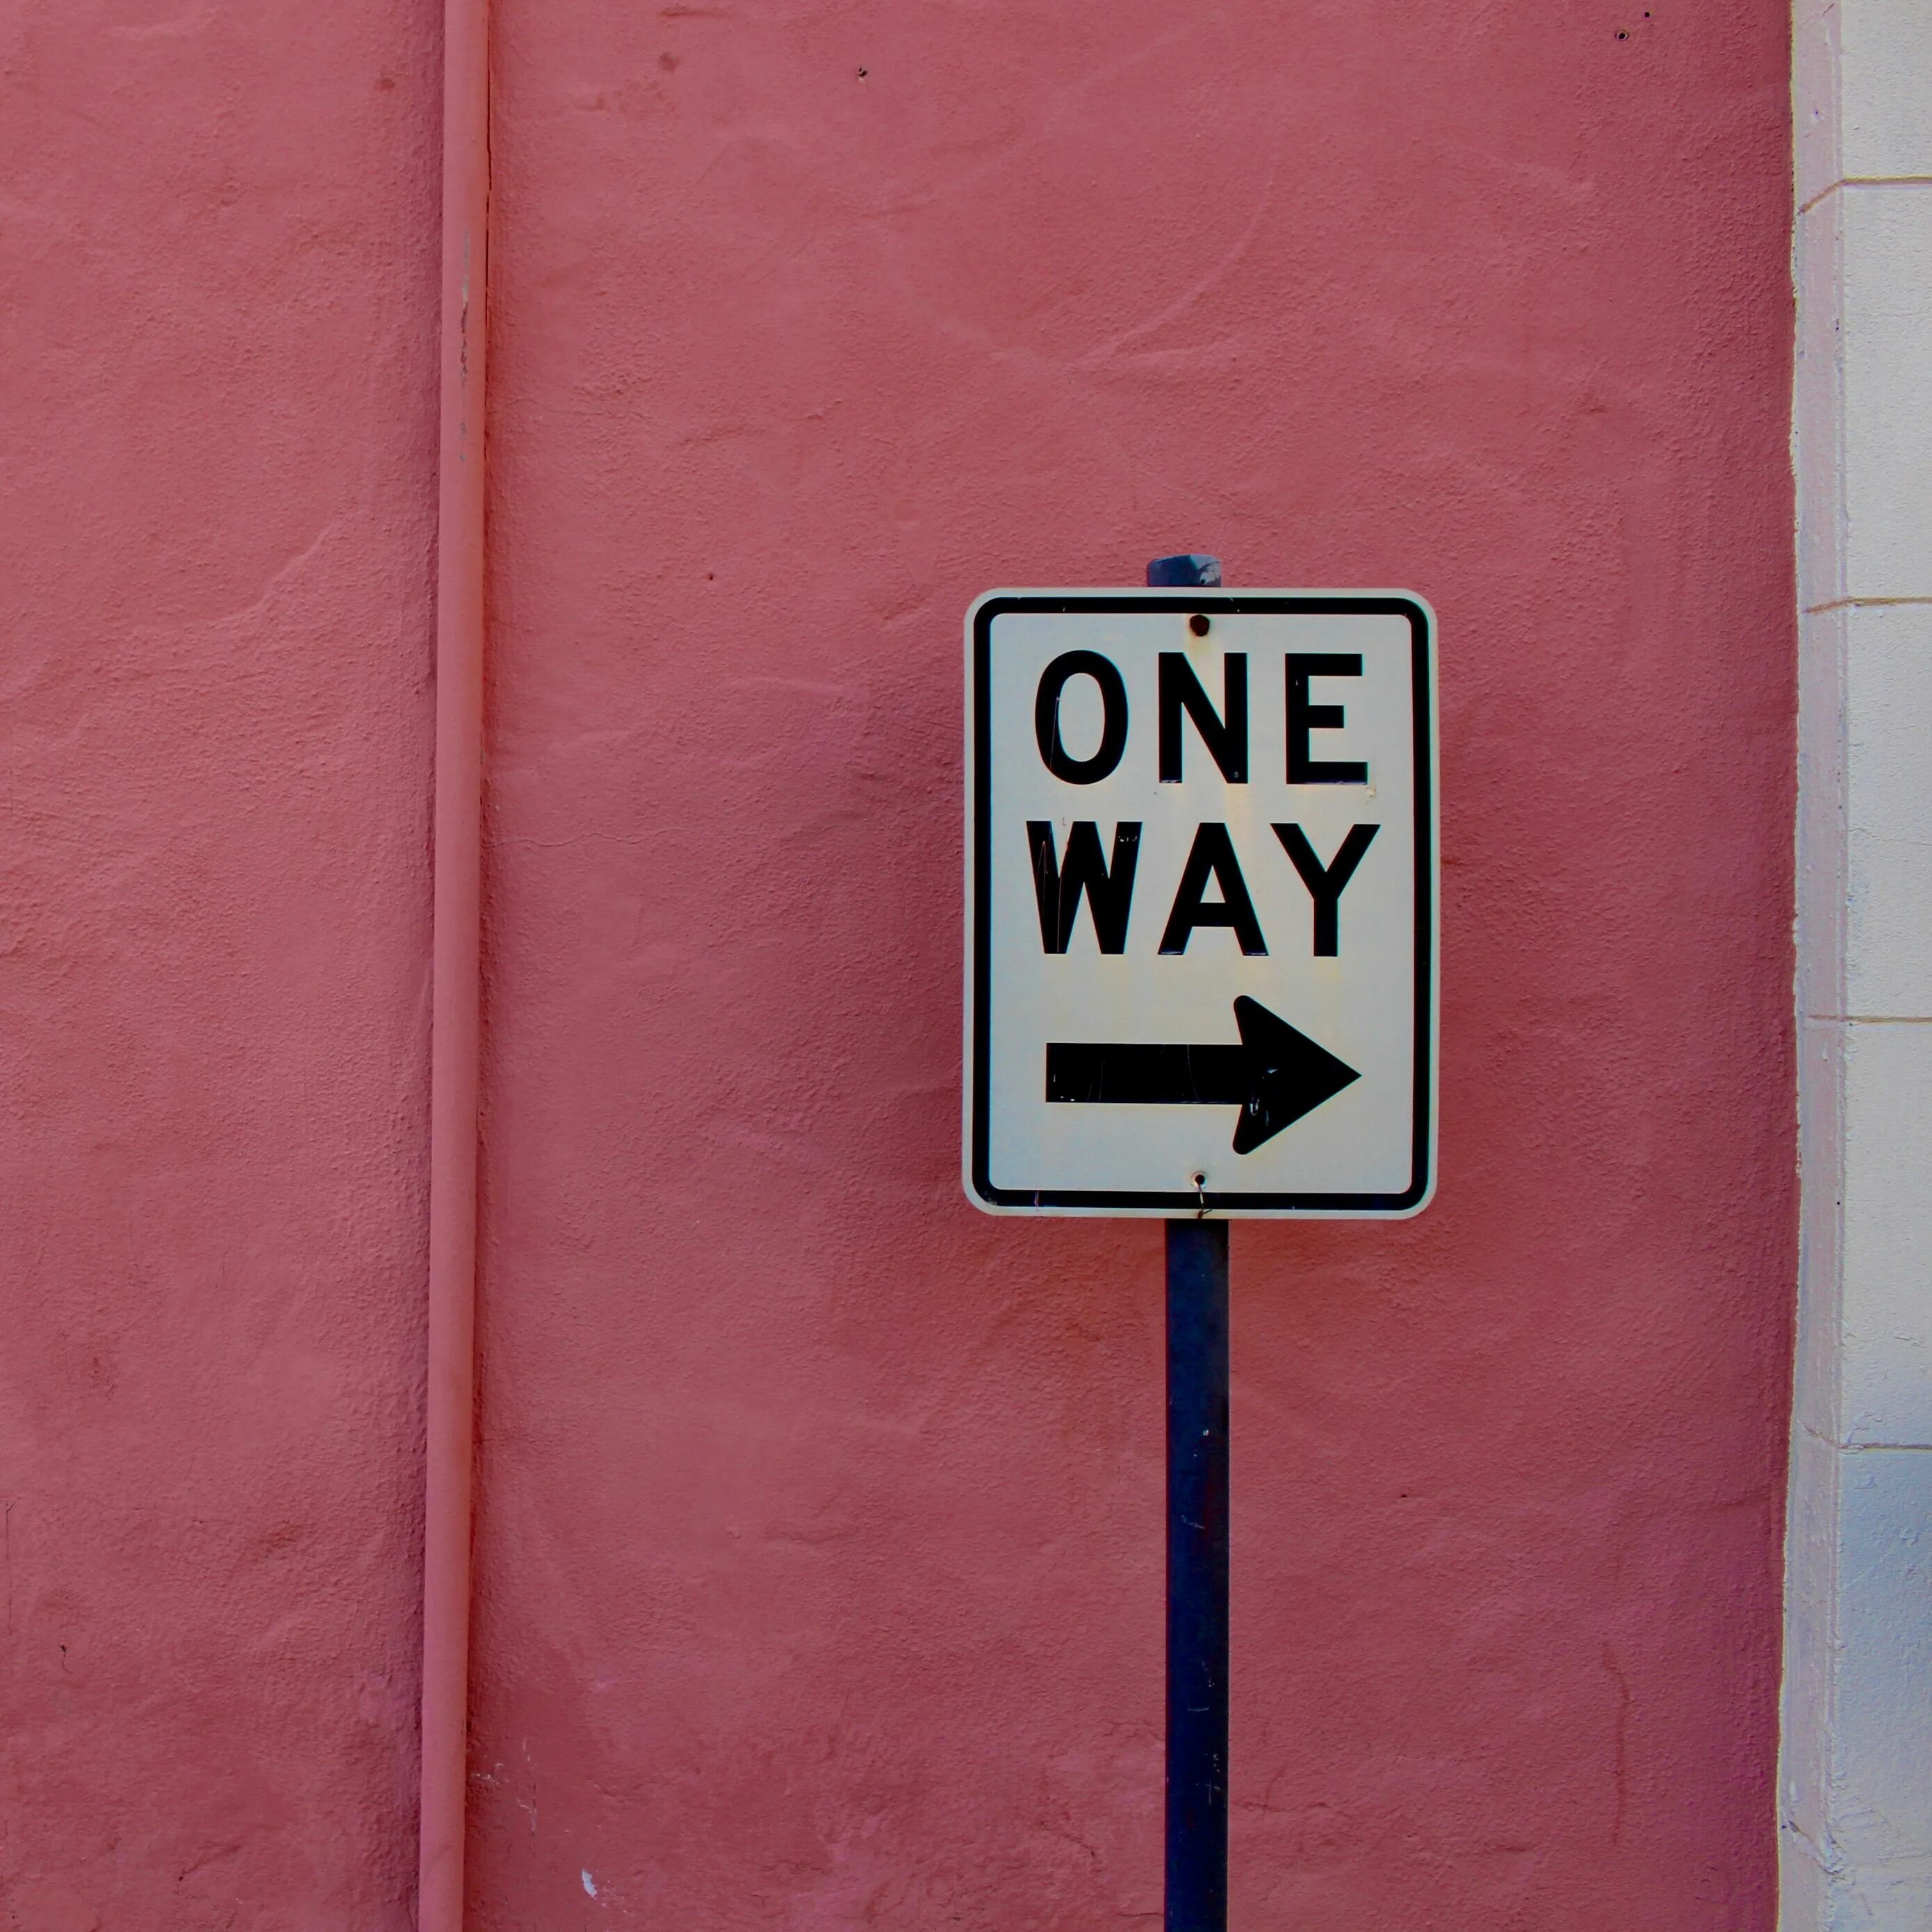 On one s way. Указатель на стене. Надпись one way. Указатель надпись на стене. One way указатель.